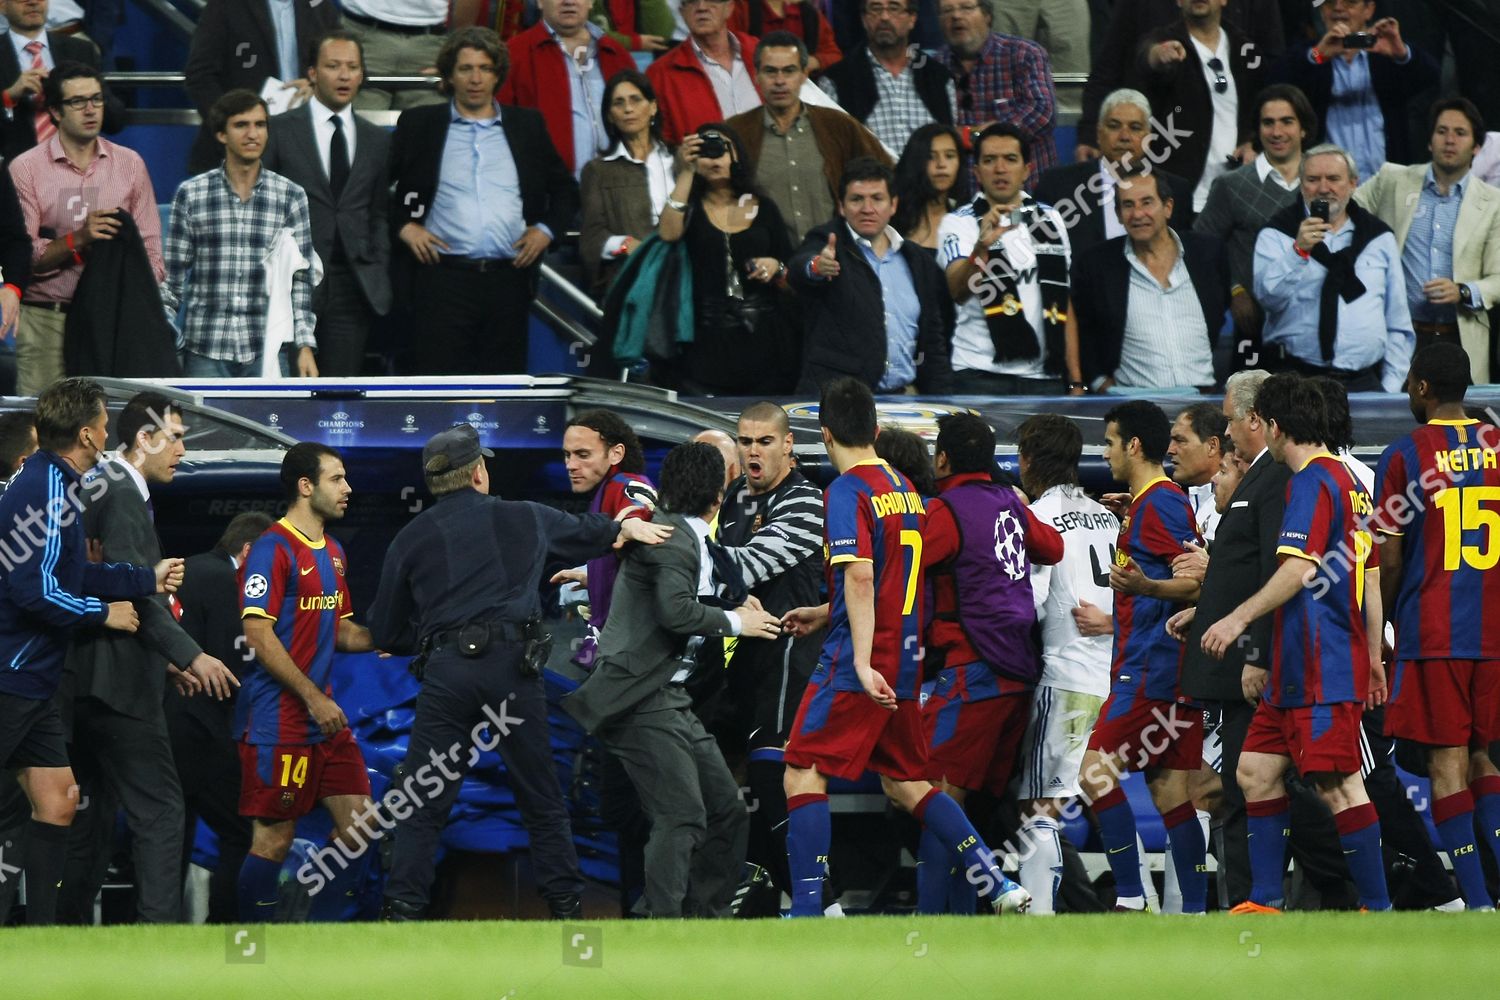 real madrid barcelona champions league 2011